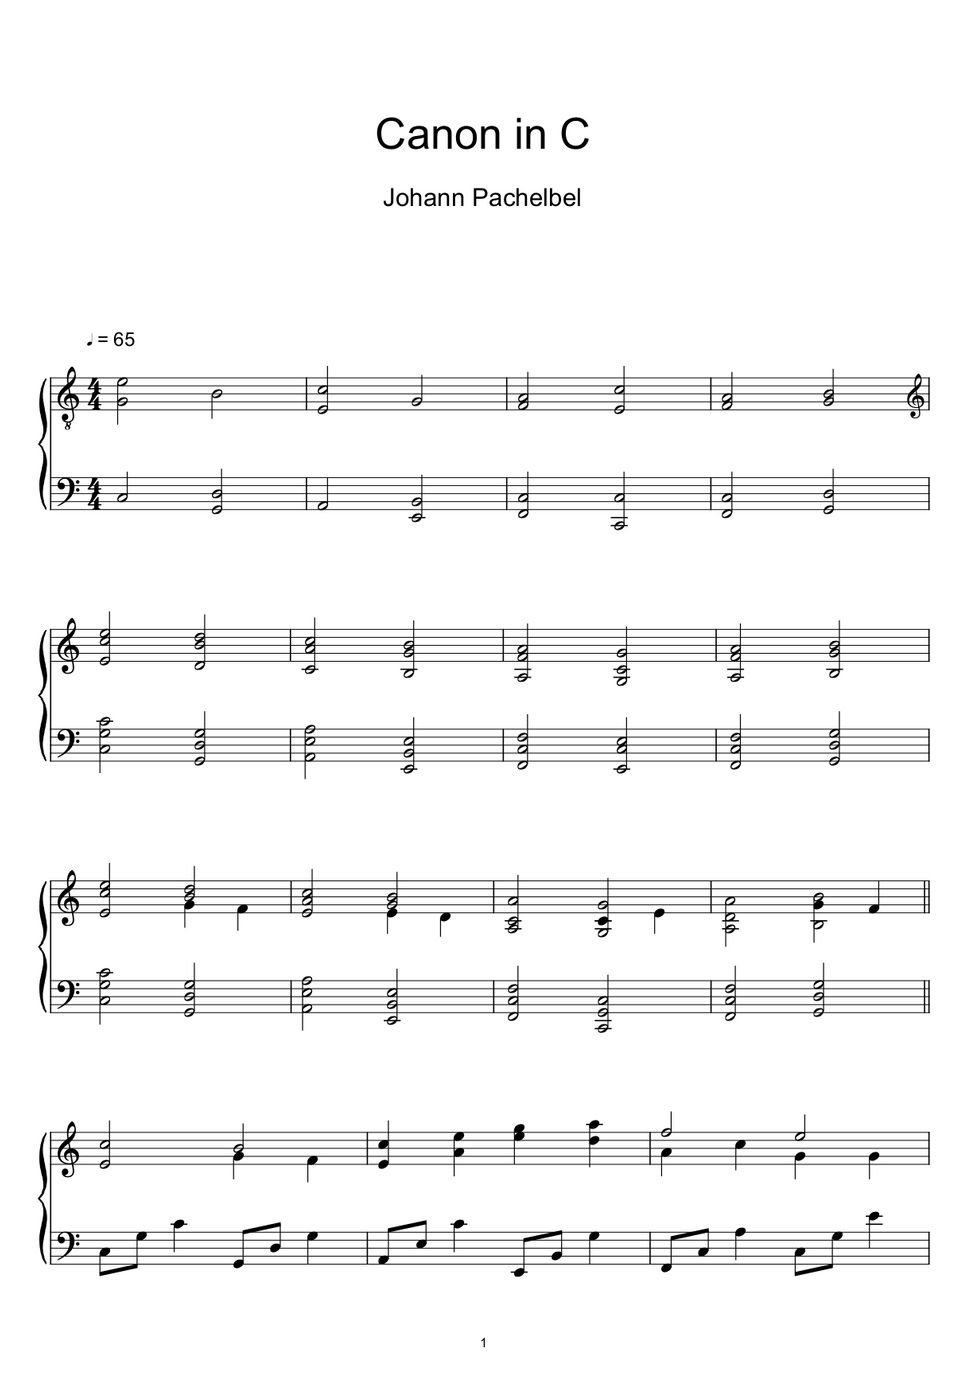 Johann Pachelbel - Canon in C (Sheet Music, MIDI,) by sayu